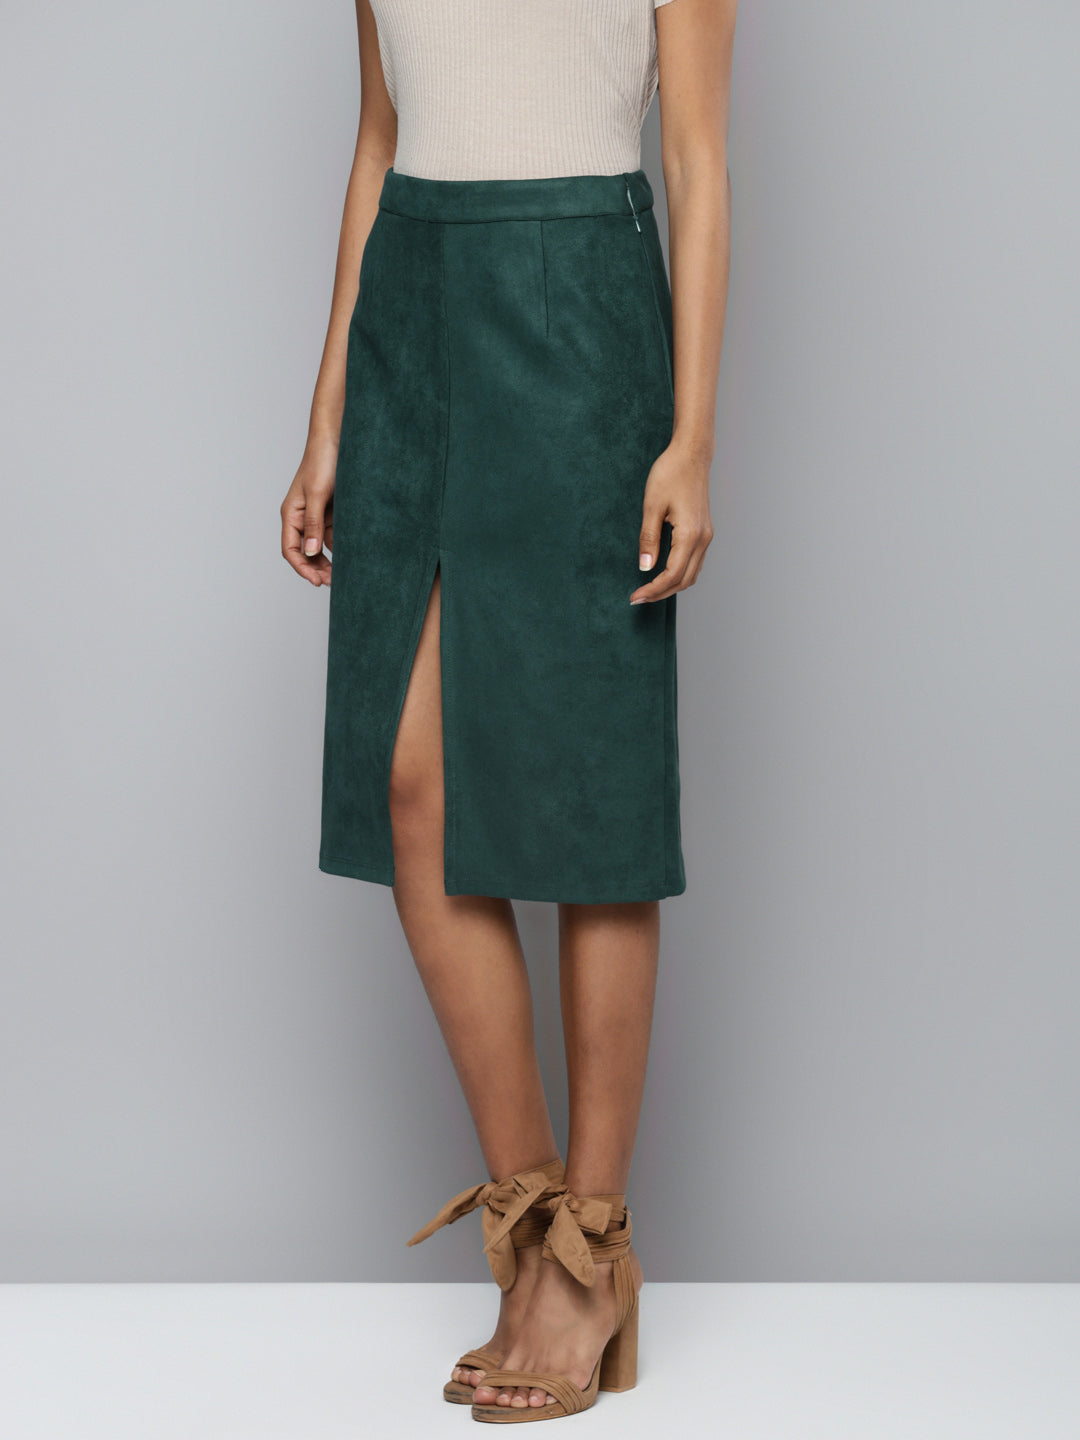 Emerald Green Suede Pencil Skirt